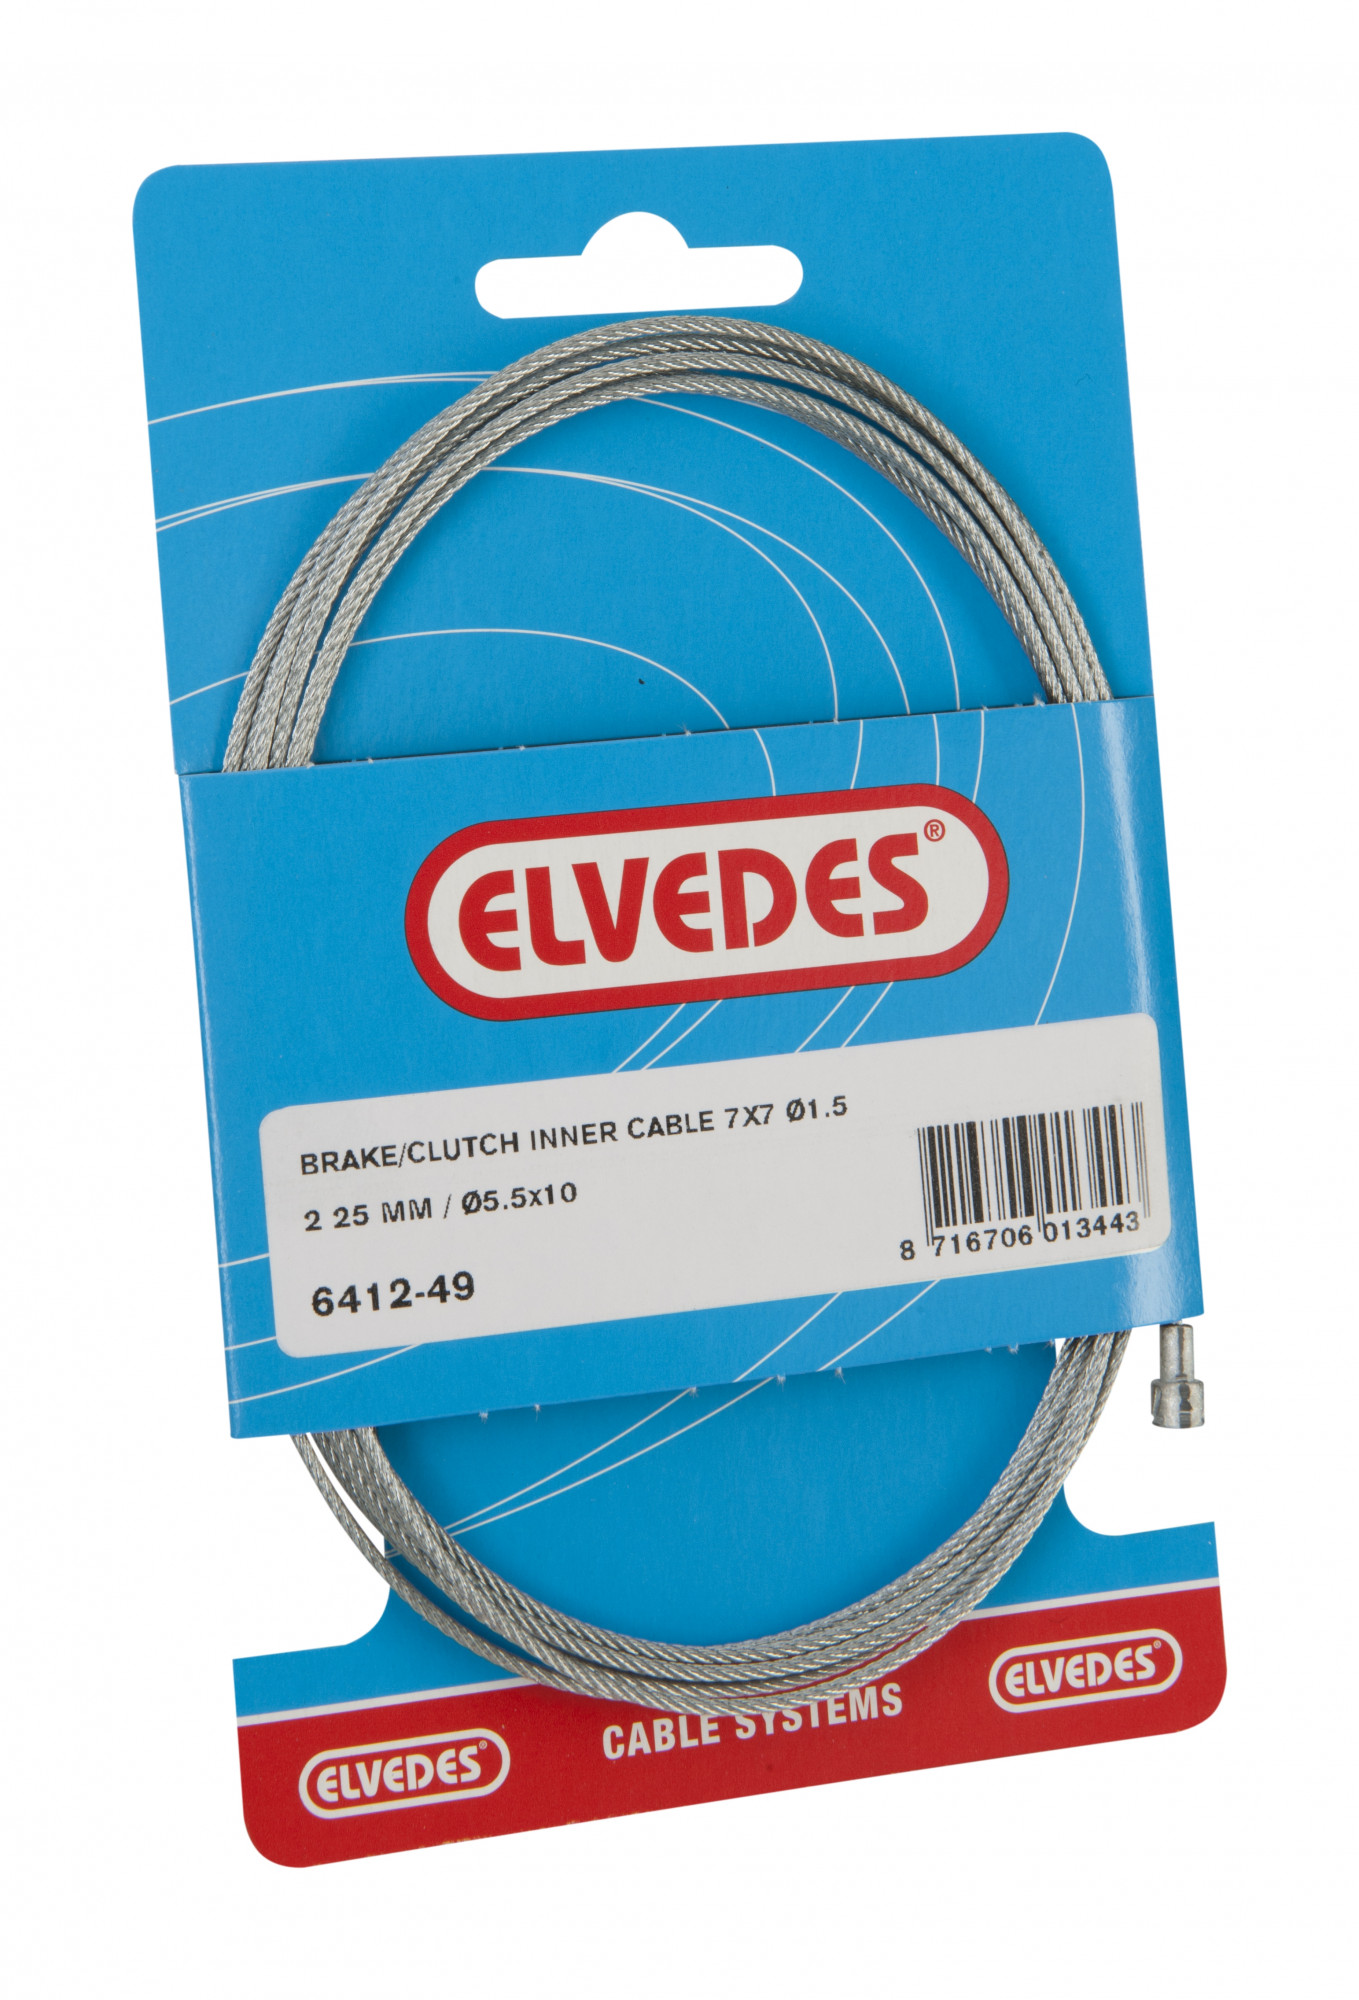 Koppeling binnenkabel Elvedes 2250mm 7x7 draads verzinkt Ø1,5mm met V-nippel (op kaart)